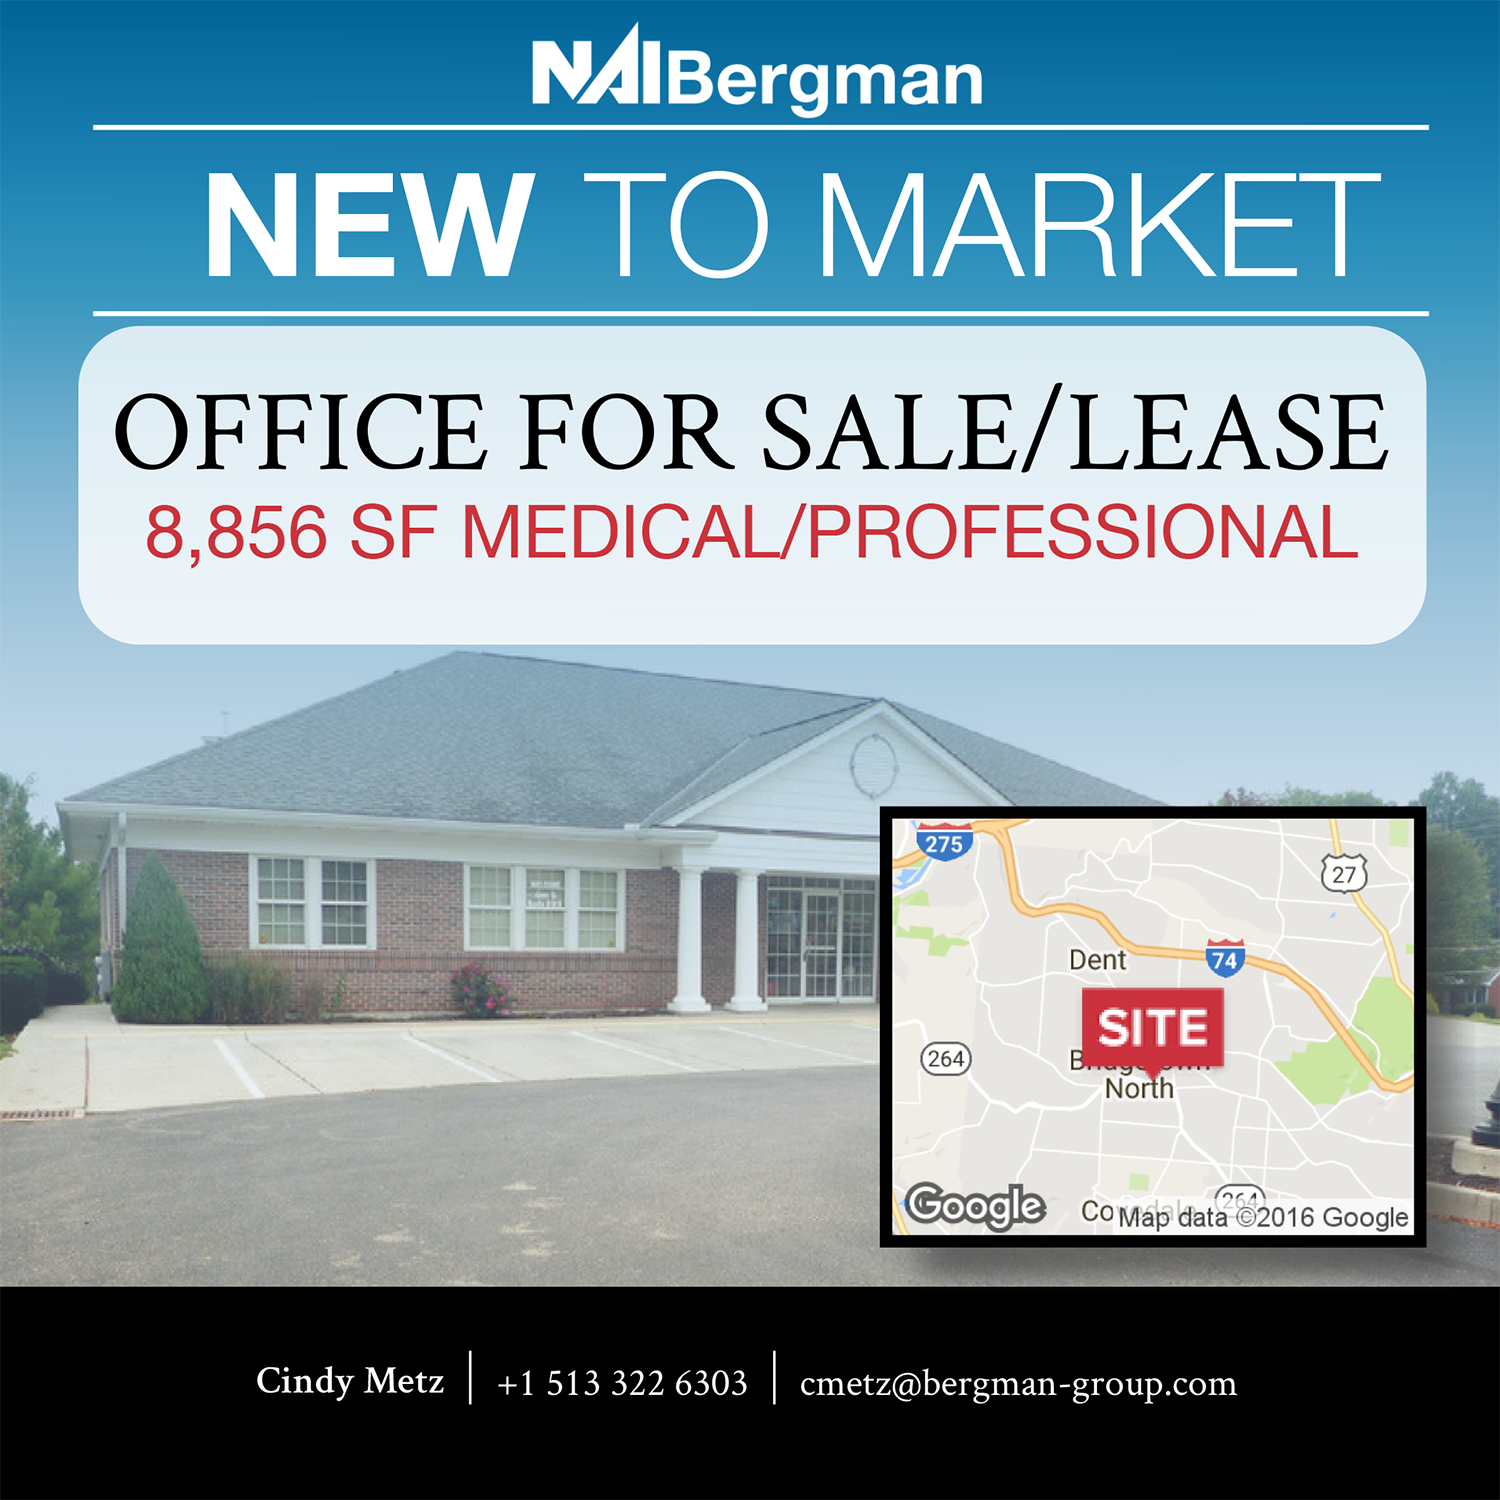 NAI Bergman, Commercial Real Estate, Office for Sale, Cindy Metz, Cincinnati, CRE, For Sale, For Lease, Bridgetown Road